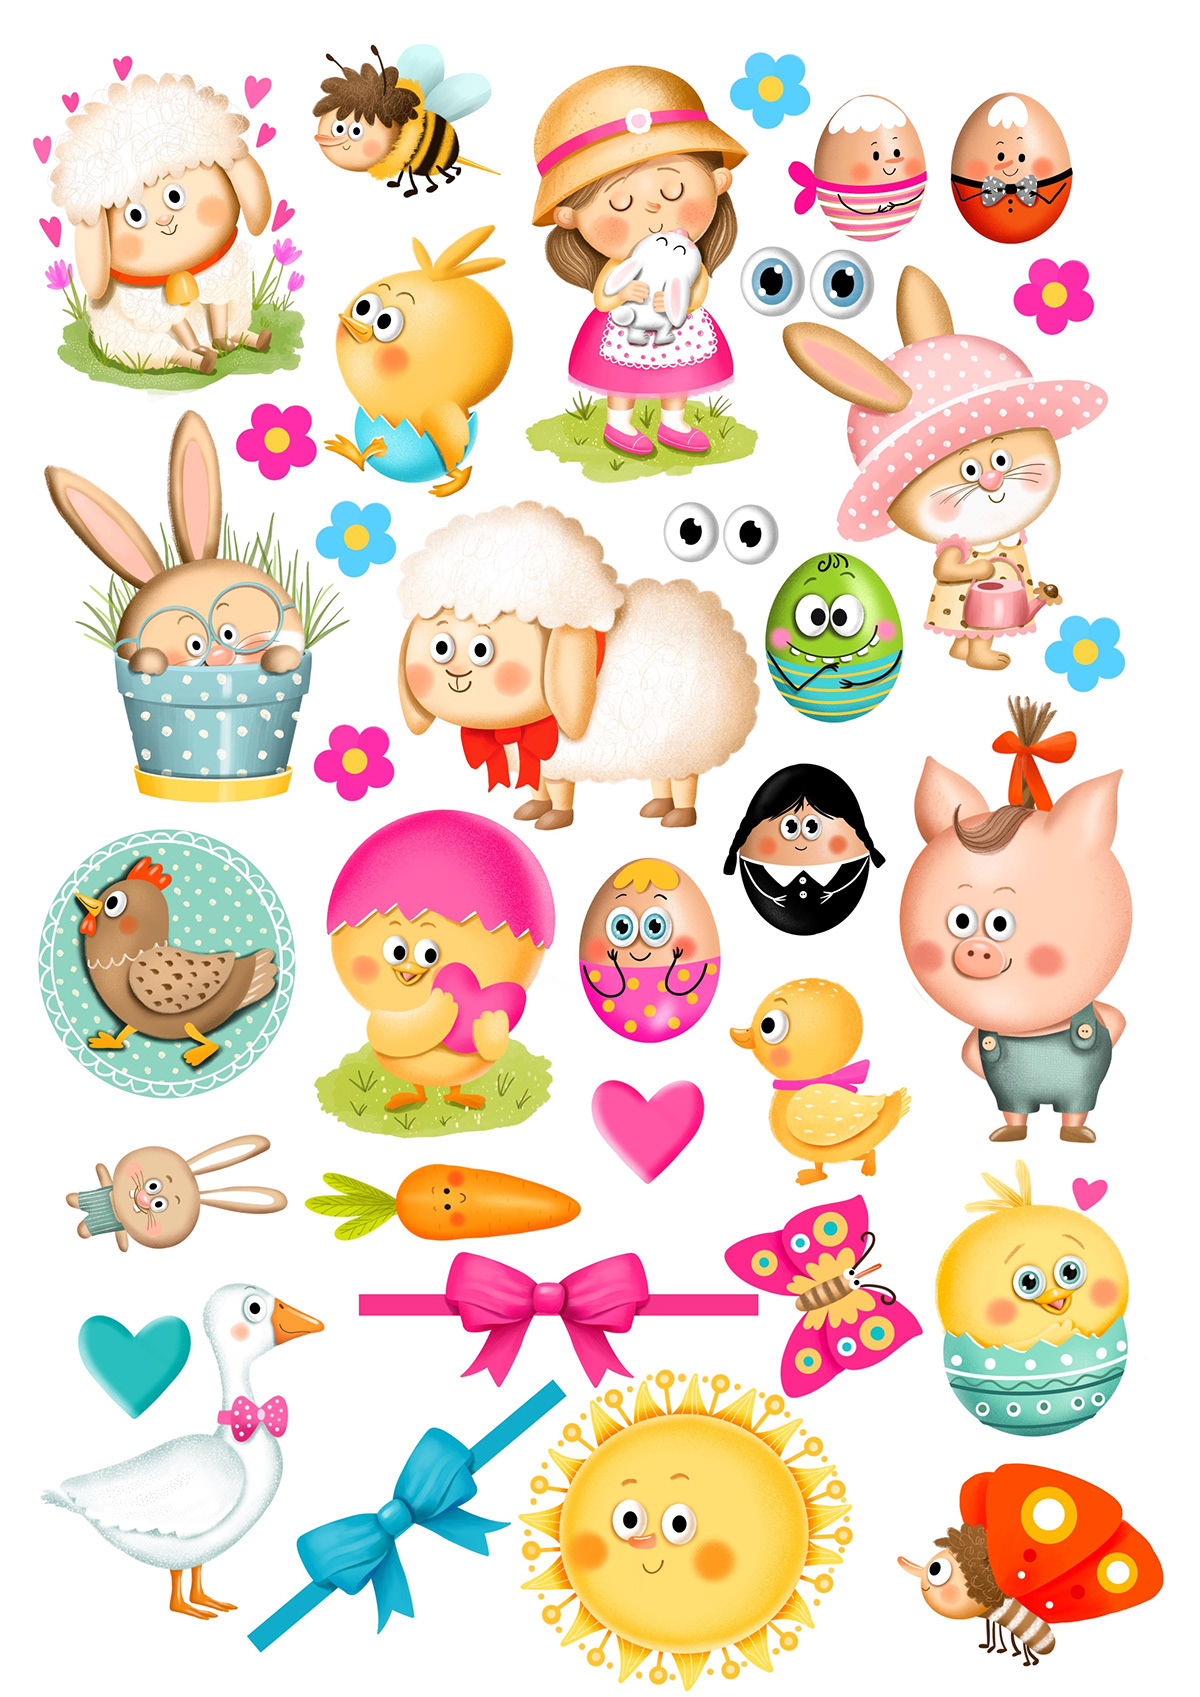 animals bunny characterdesign children's book ChildrenIllustration cute Easter rabbit spring stickers